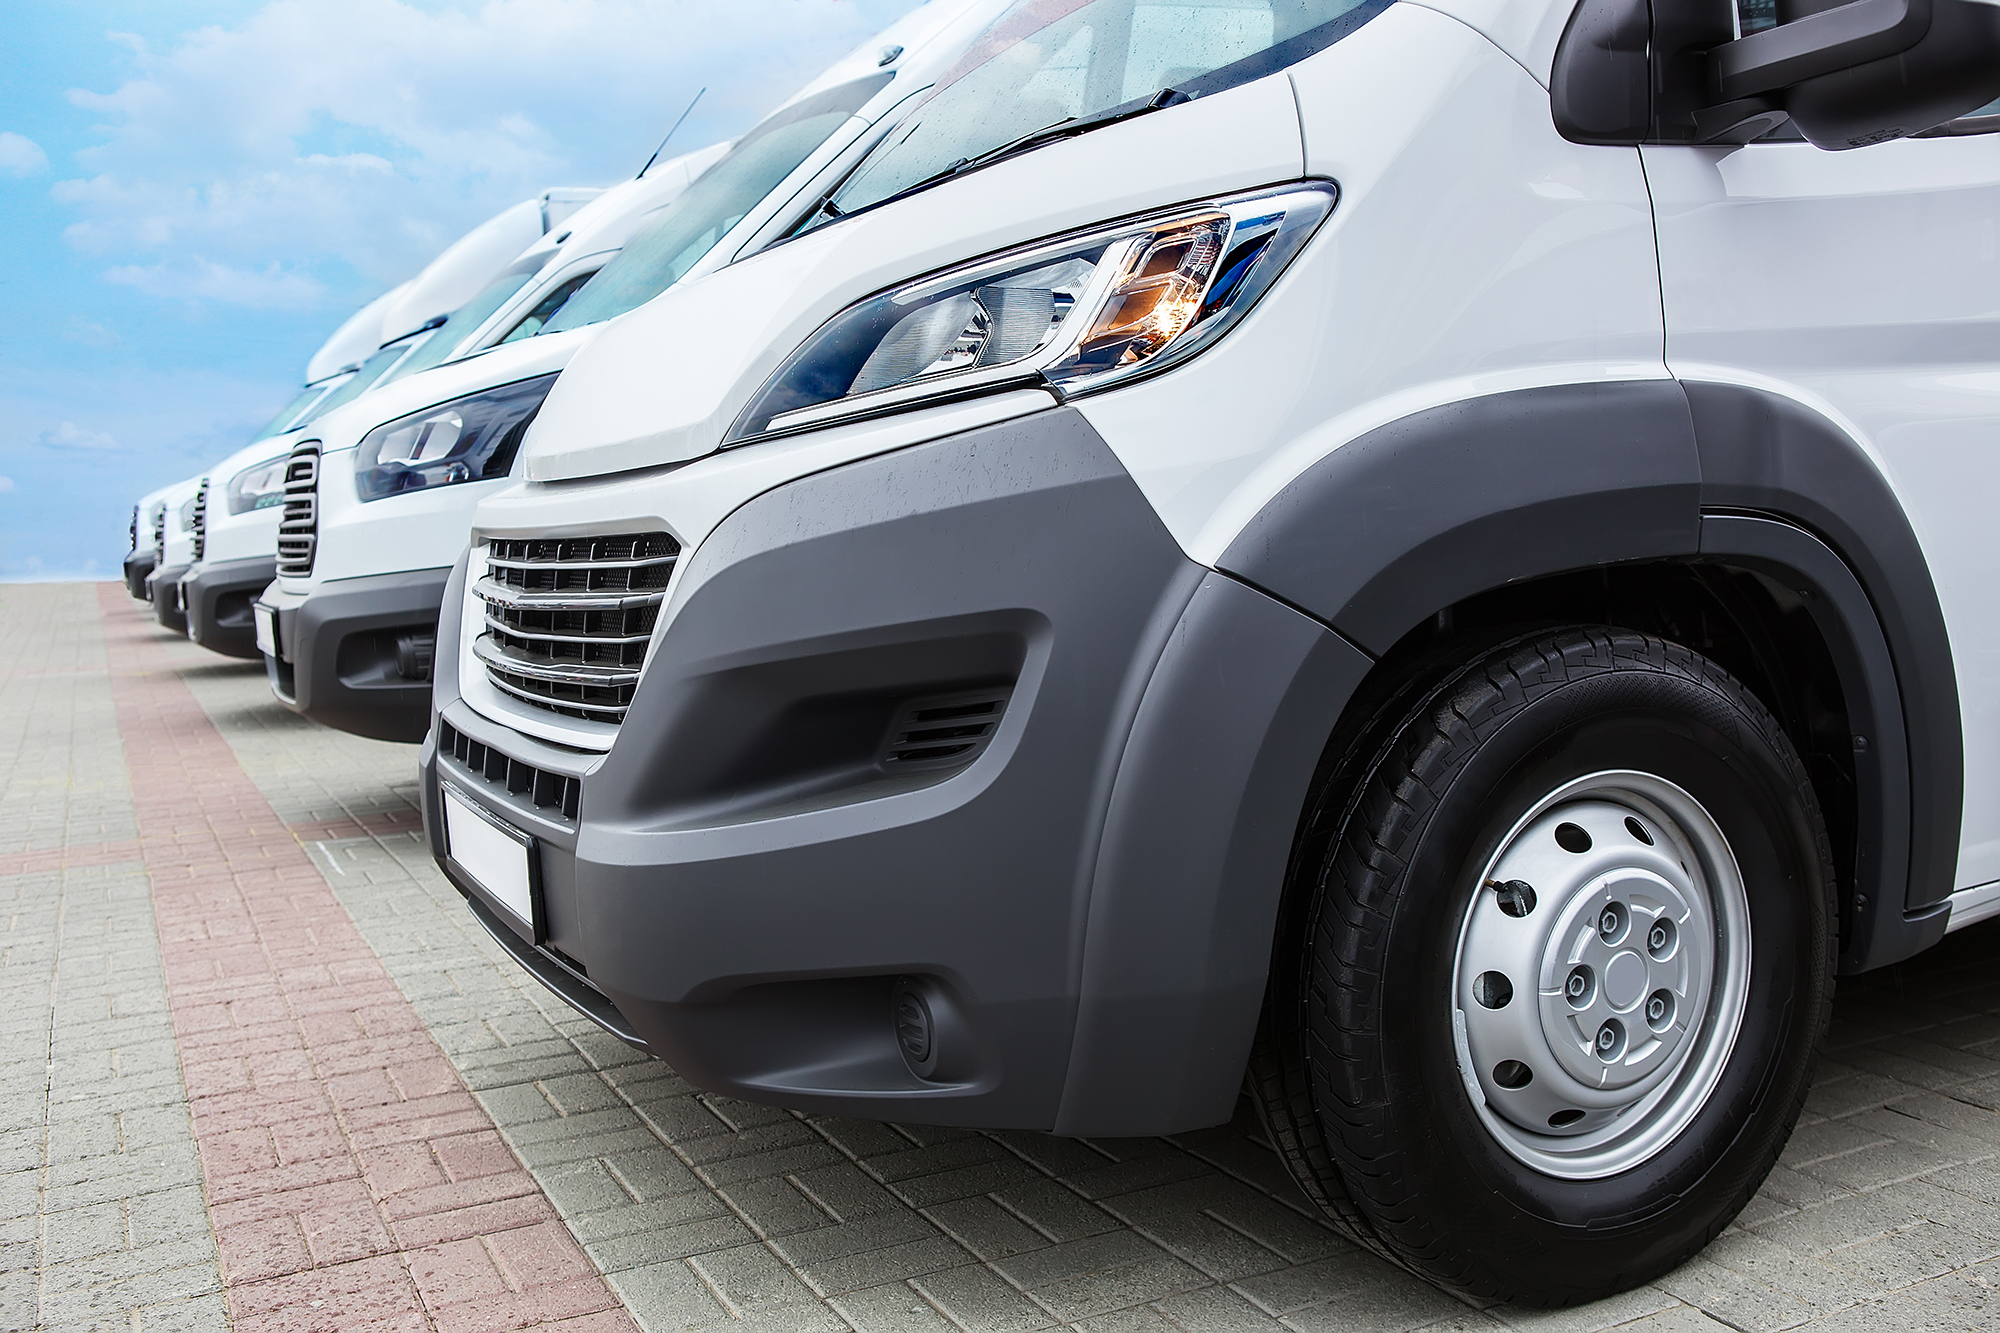 A row of vans. (Image: Shutterstock)